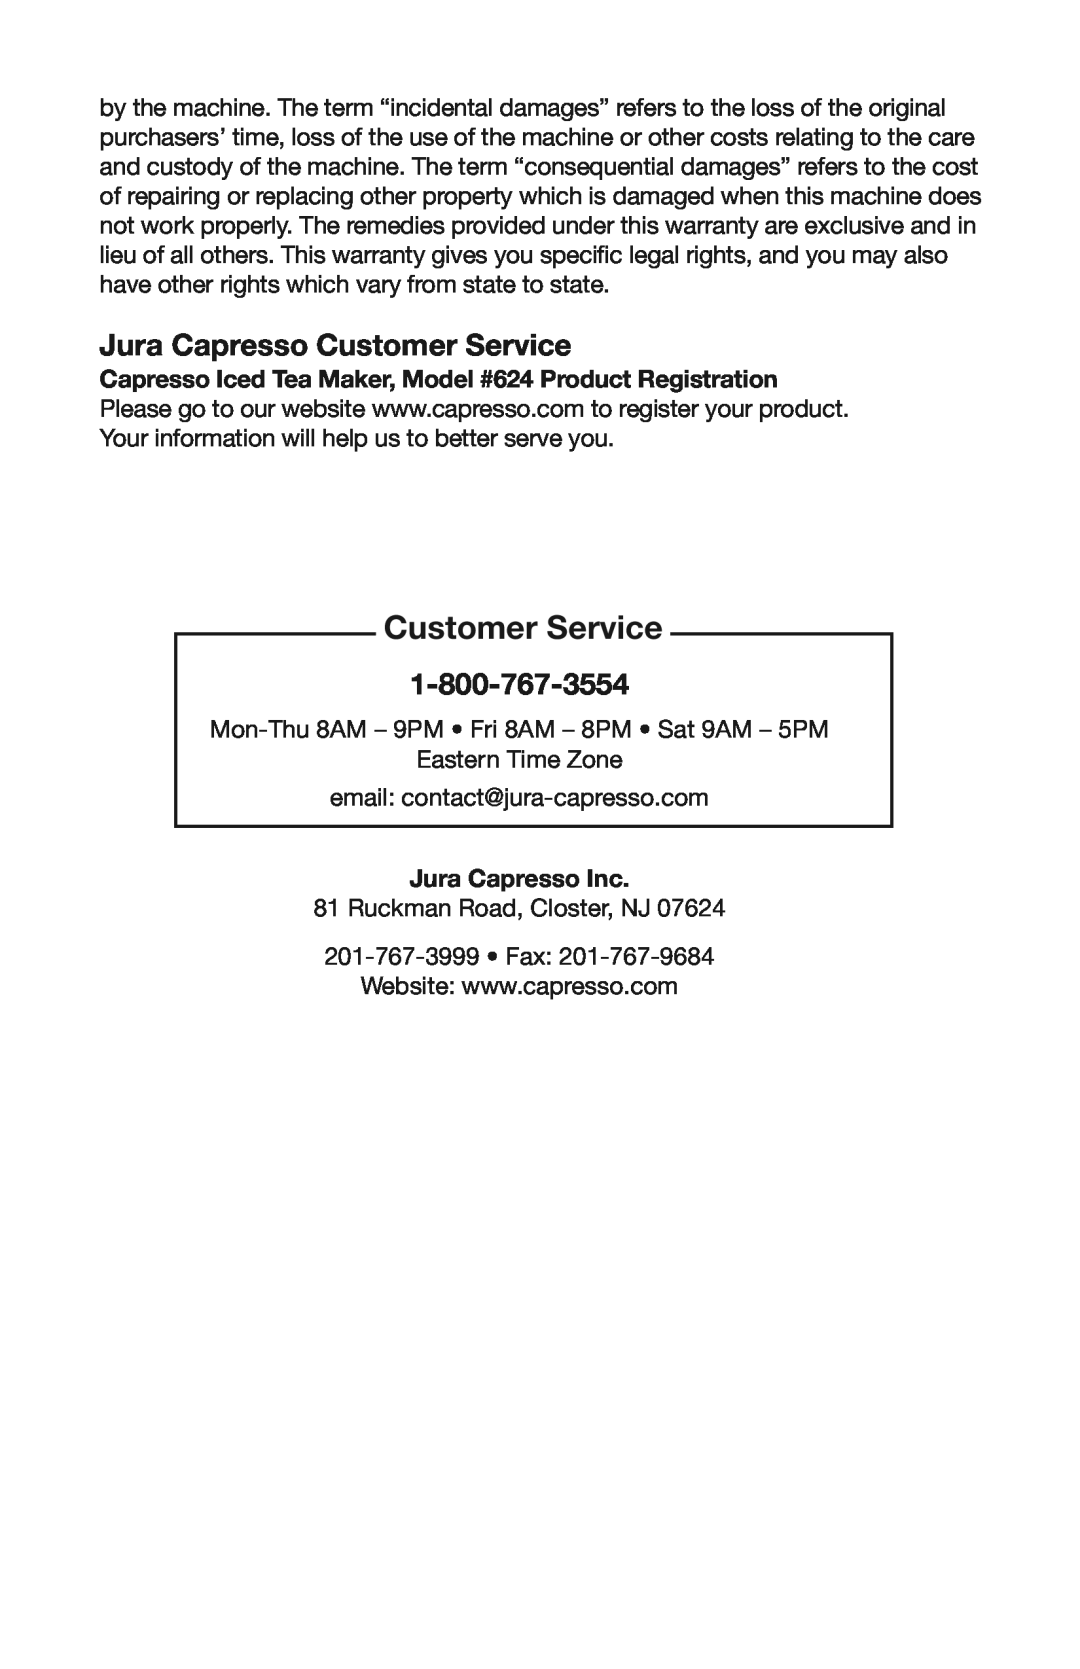 Capresso 624 warranty Jura Capresso Customer Service, Jura Capresso Inc 